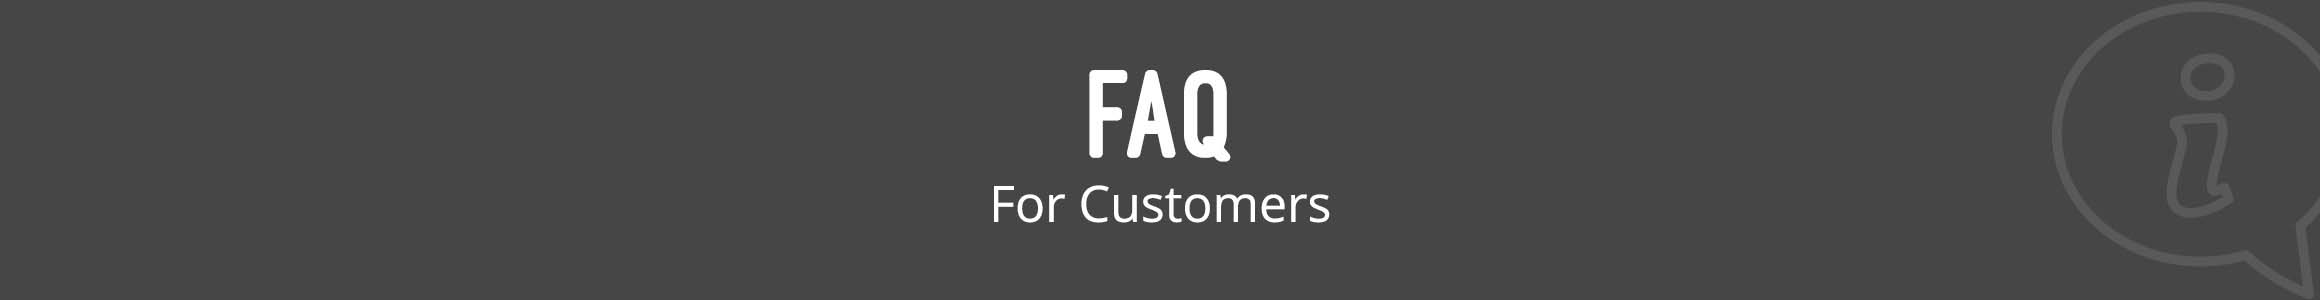 FAQ for Customers